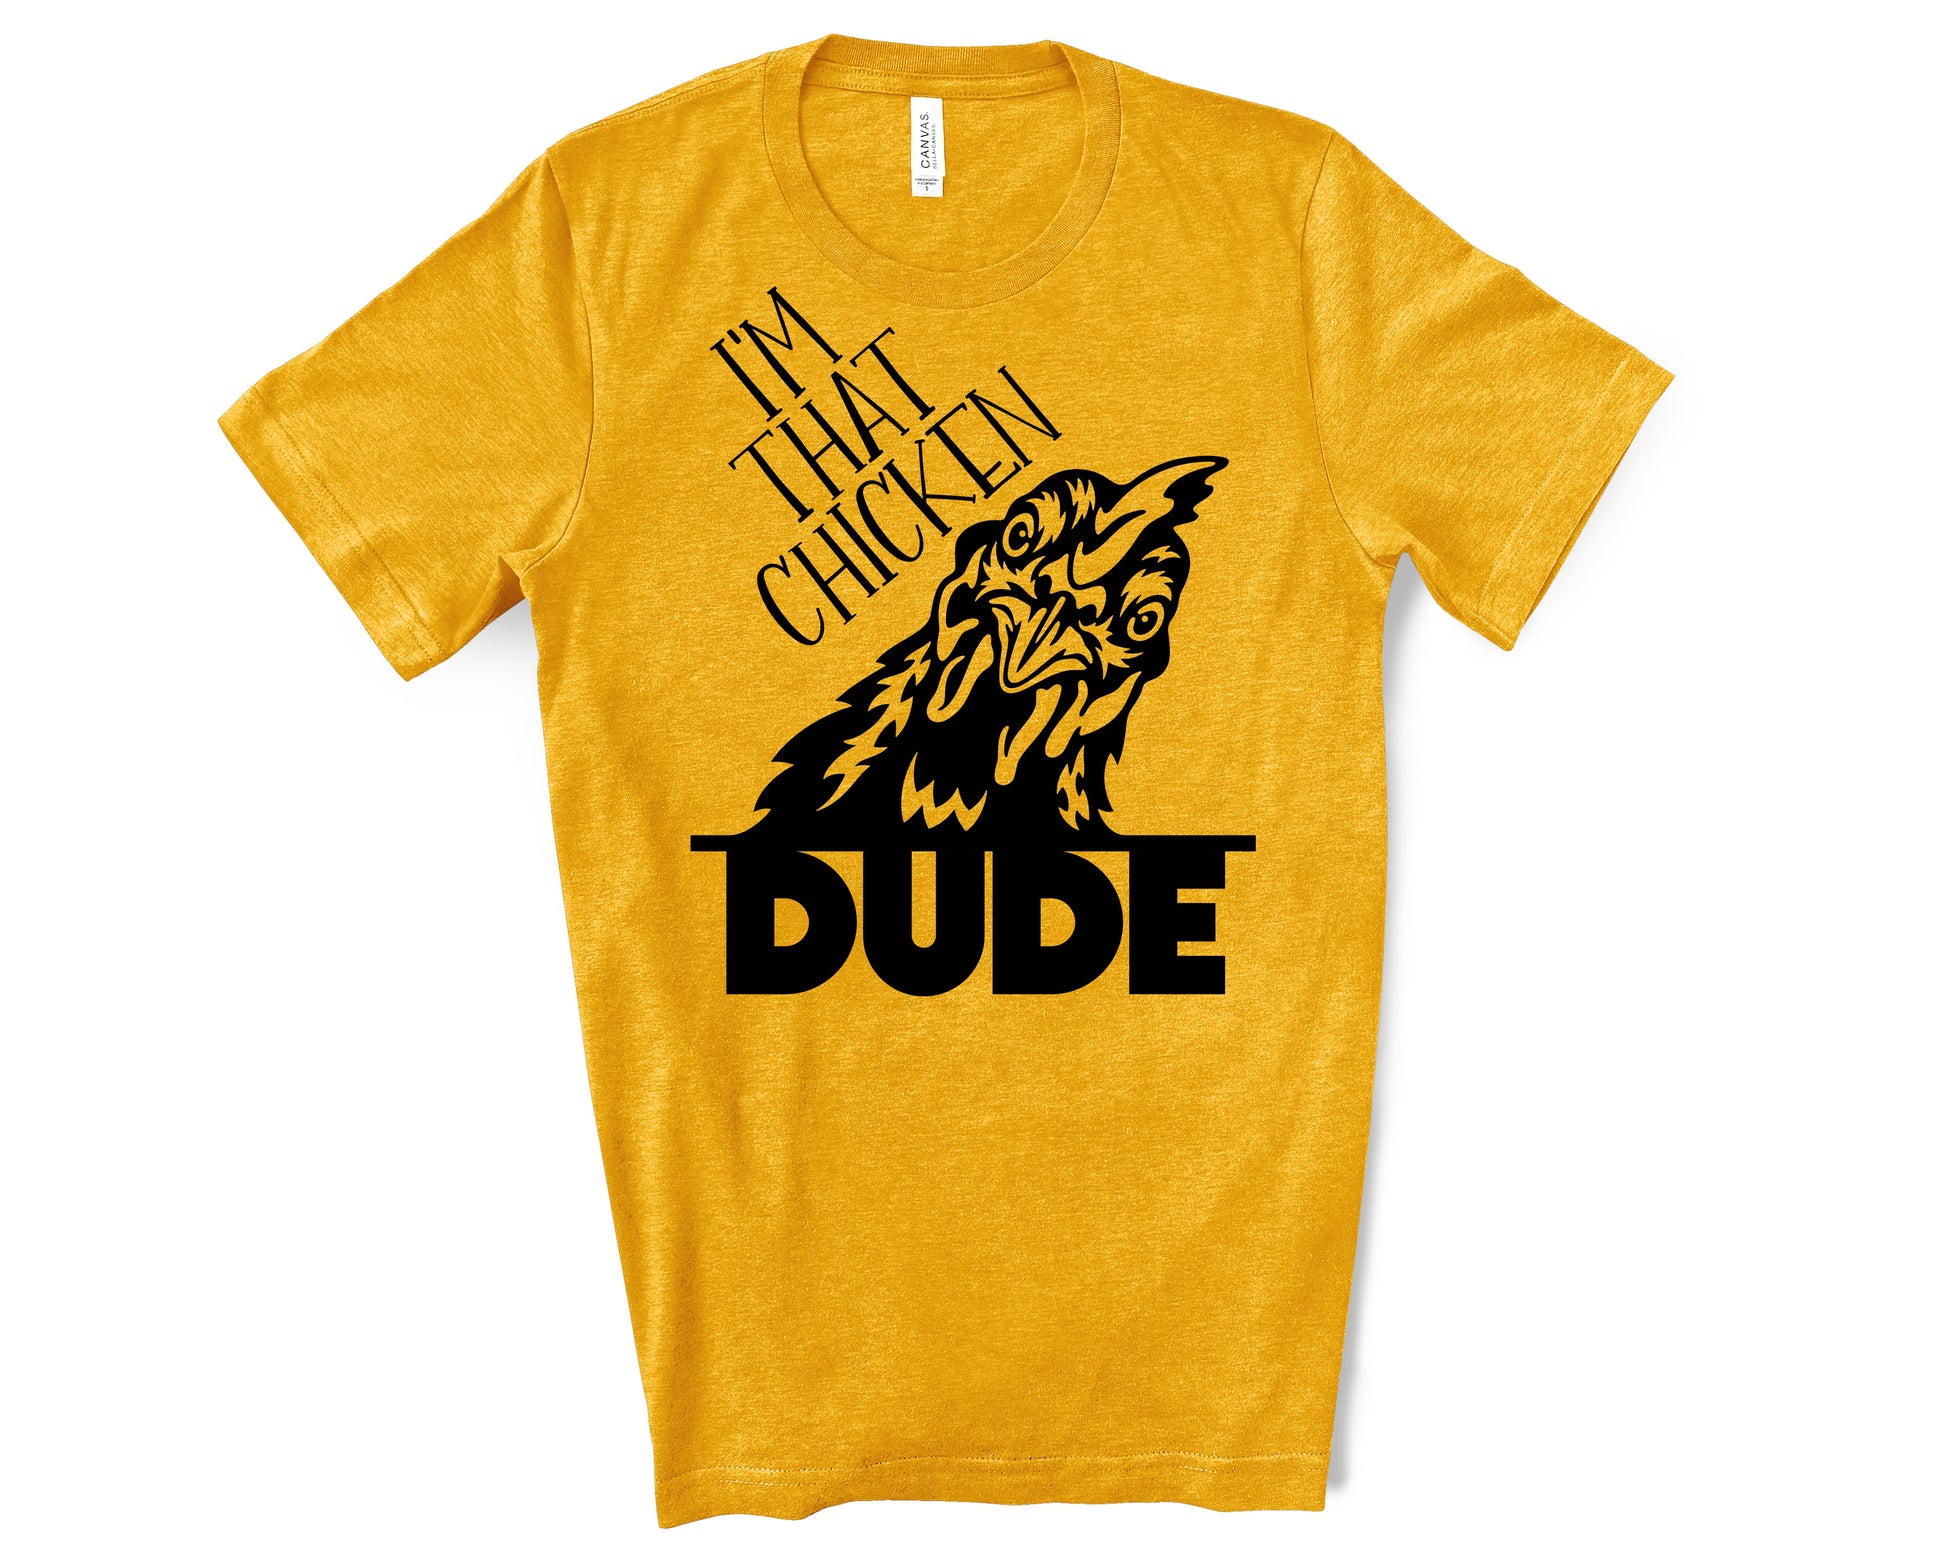 Chicken Dude shirt